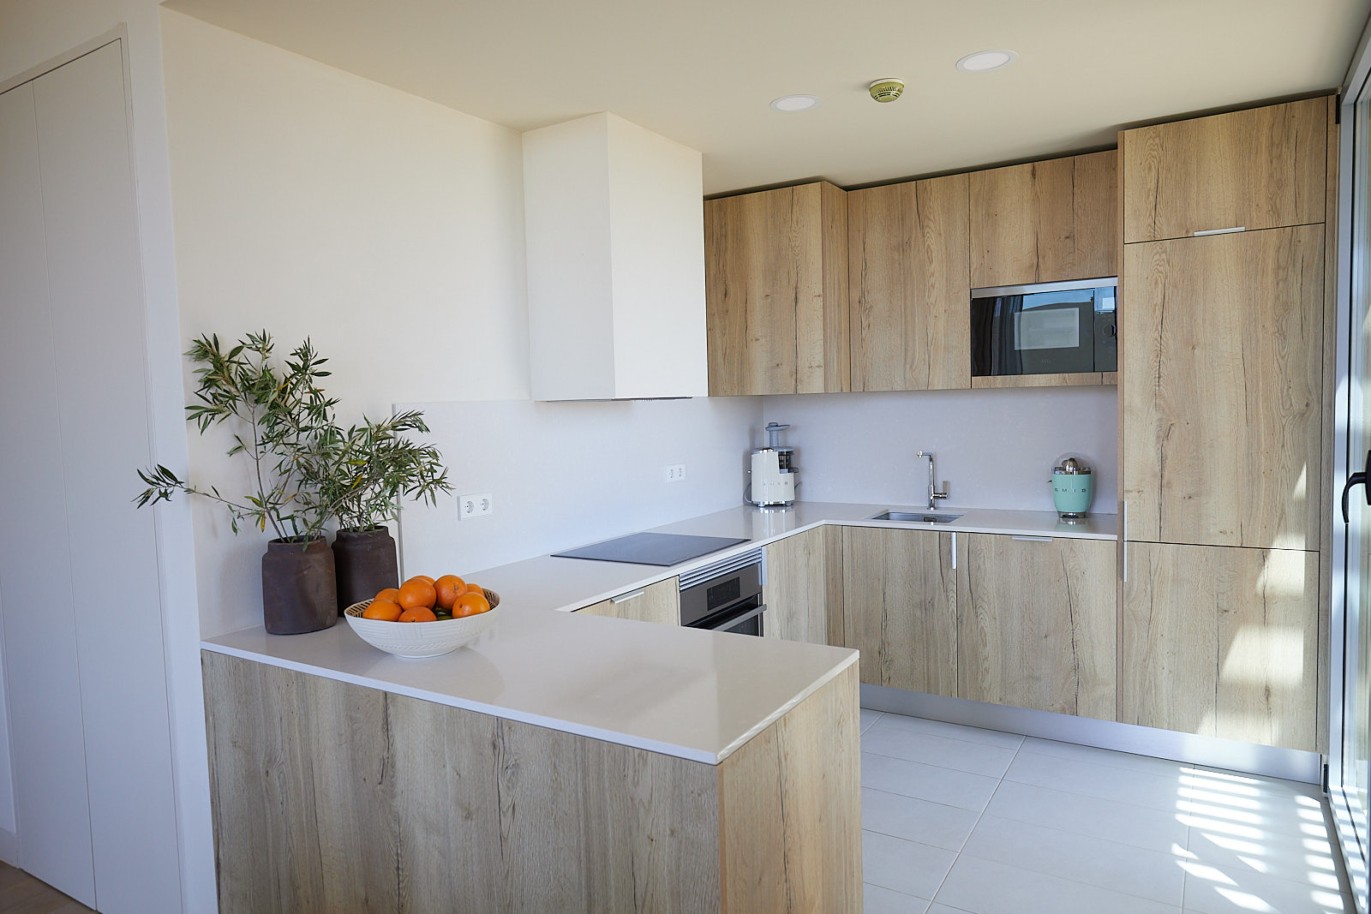 1 bedroom apartment in resort, for sale in Porches, Algarve_228997